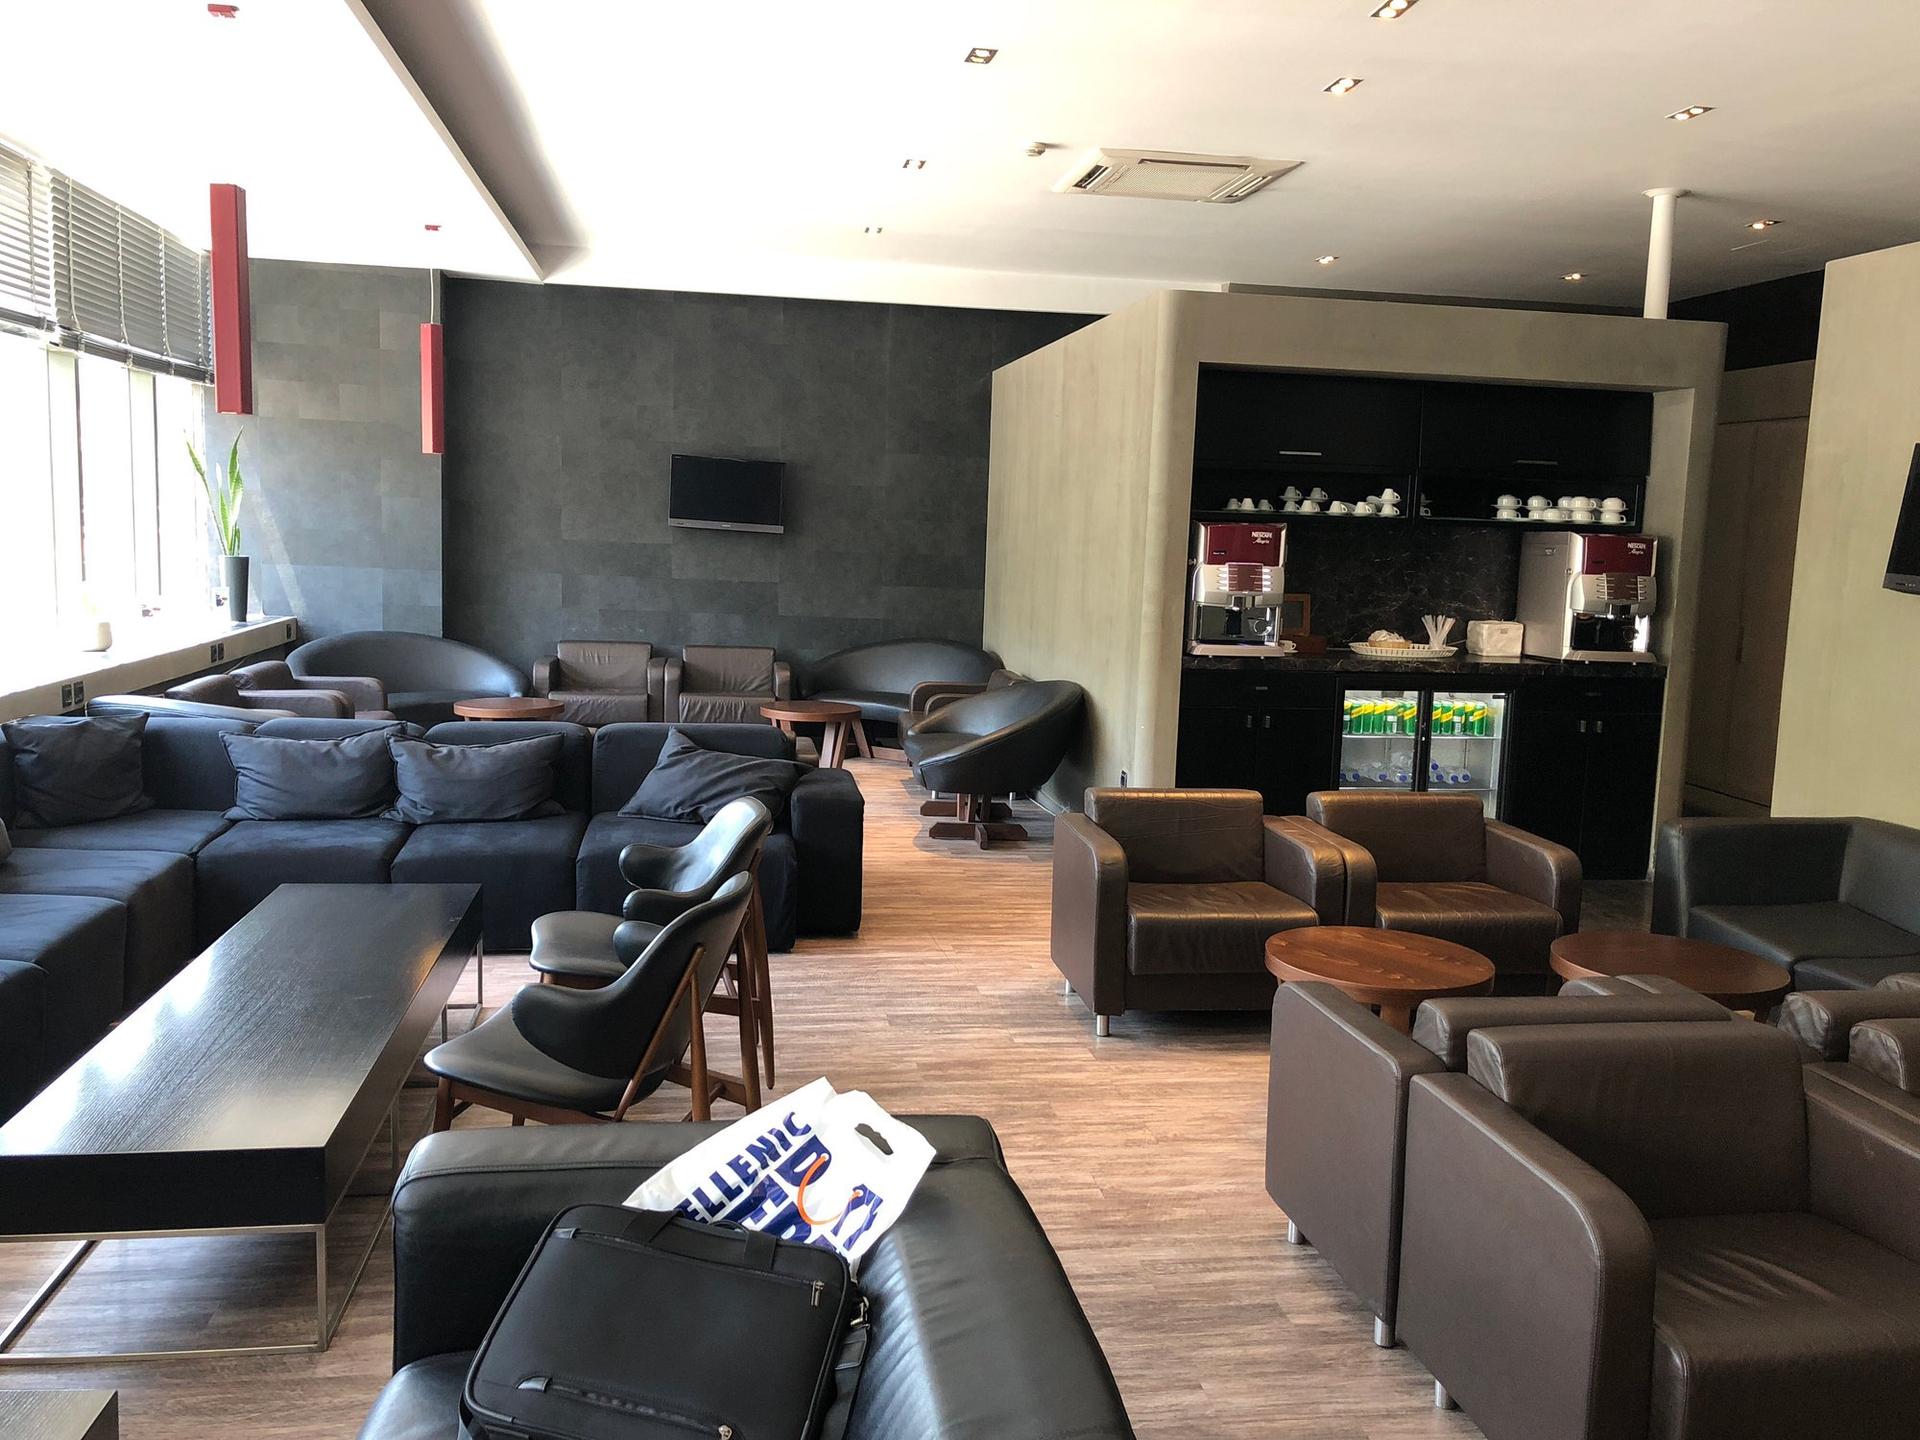 Swissport Filoxenia Lounge image 4 of 5